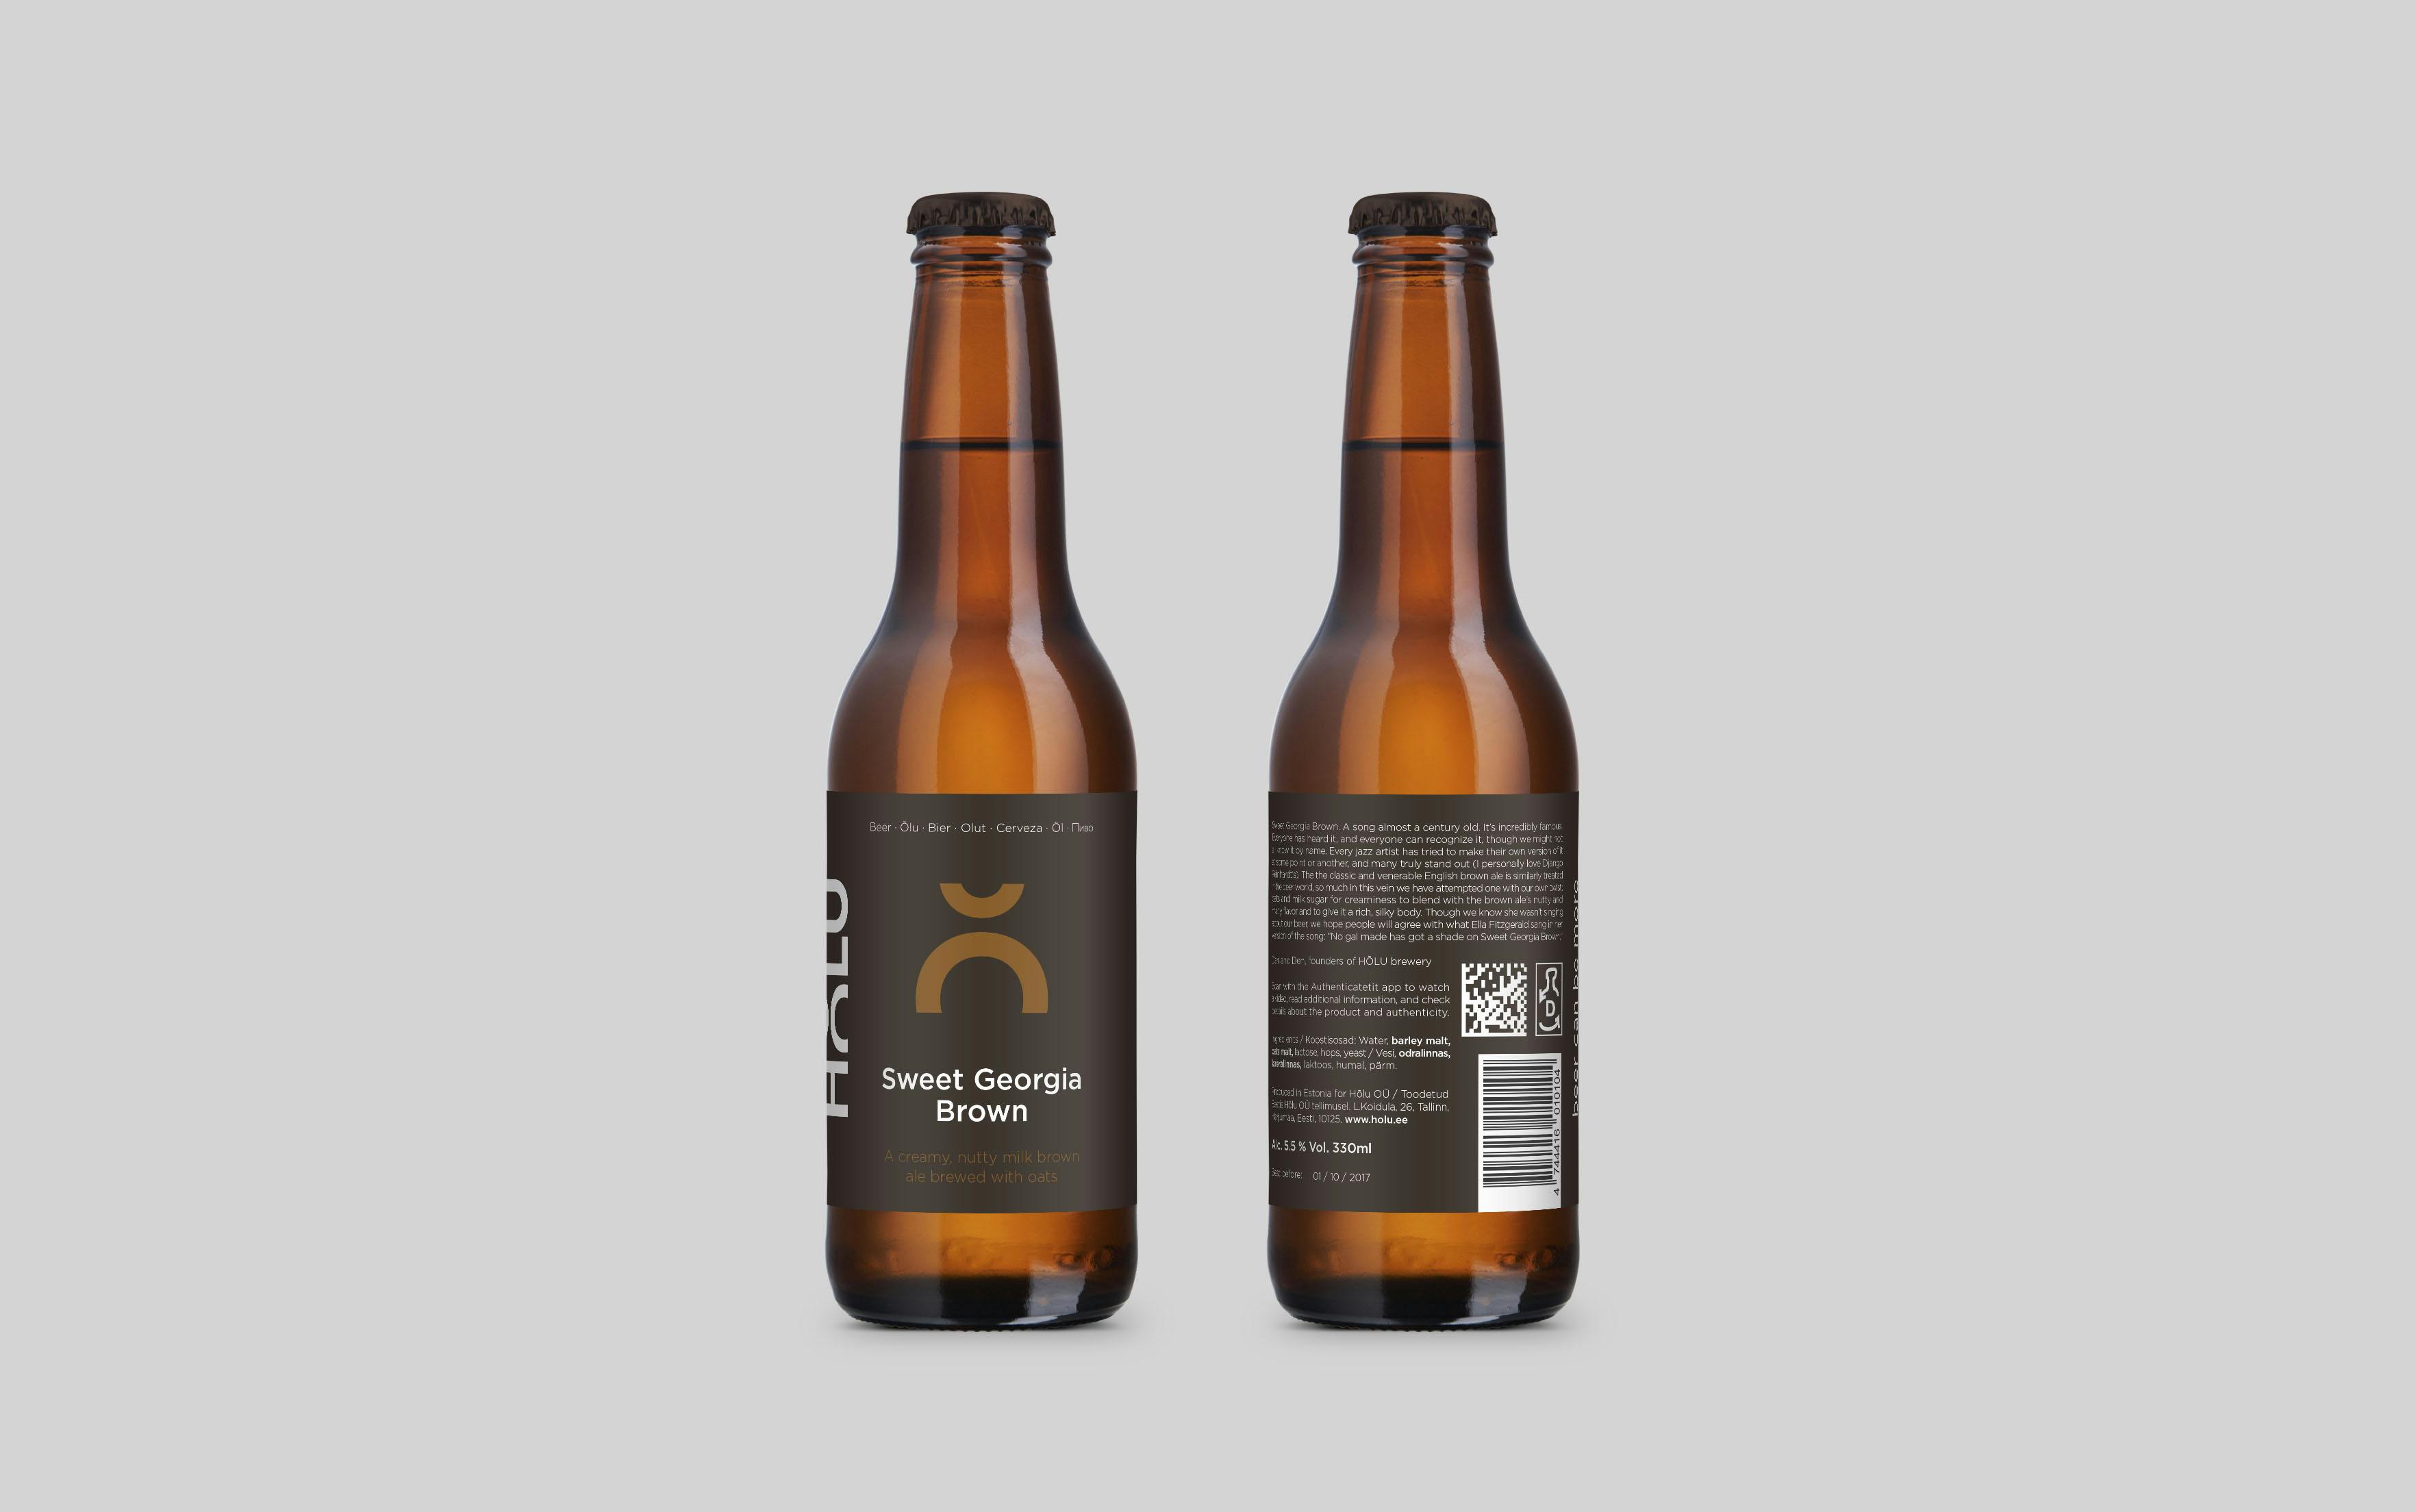 https://site.no11.ee/wp-content/uploads/2018/03/No11_Hõlu_beer-bottle-packaging-design-1.jpg